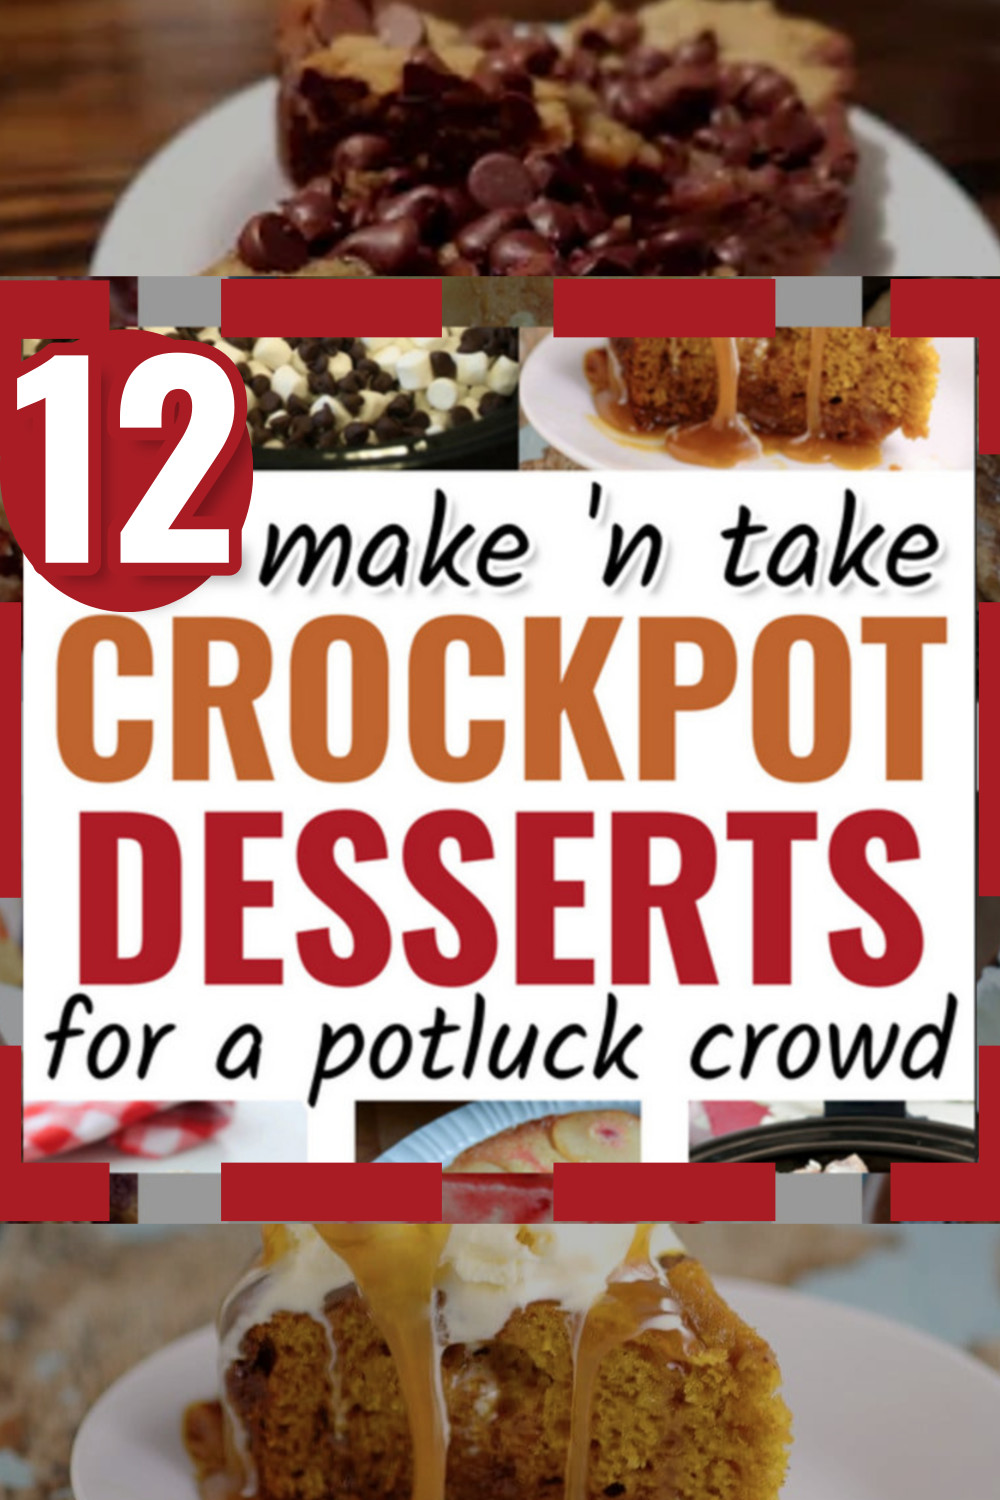 Potluck Desserts - 12 Easy Crockpot Desserts For a Crowd